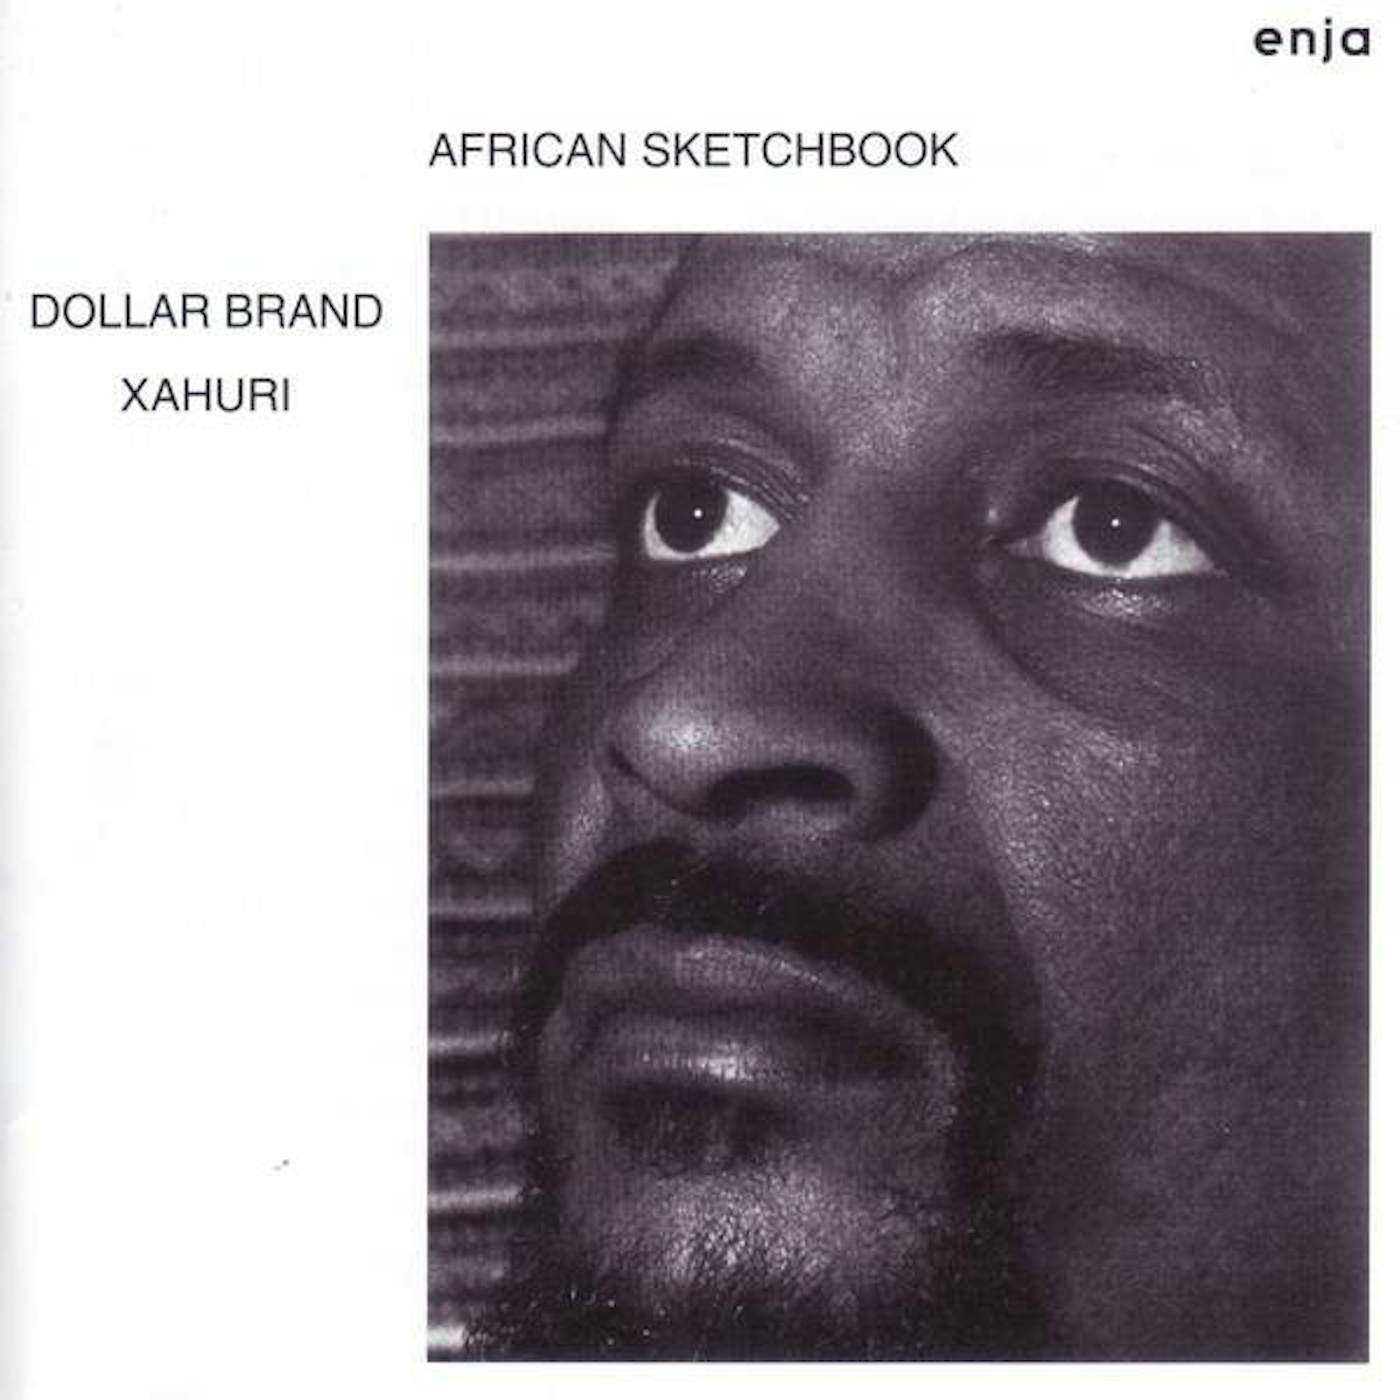 Dollar Brand AFRICAN SKETCHBOOK CD